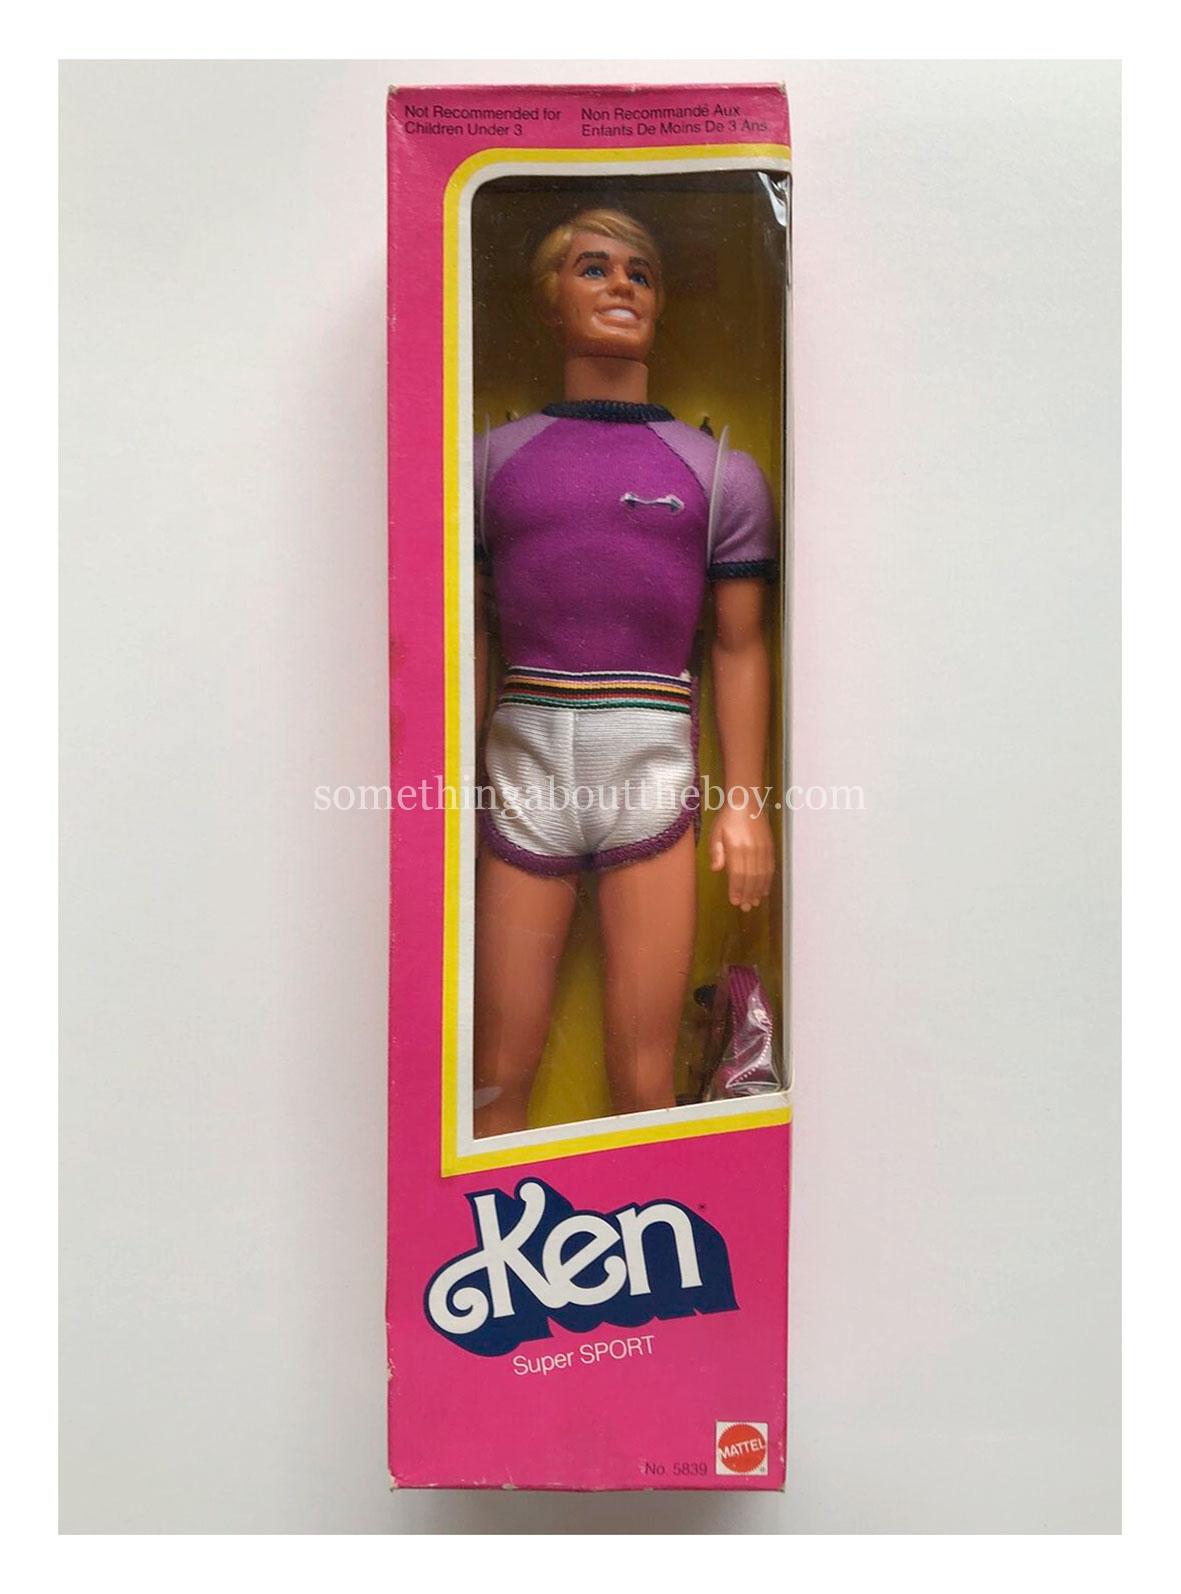 1983 #5839 Super Sport Ken in Canadian packaging